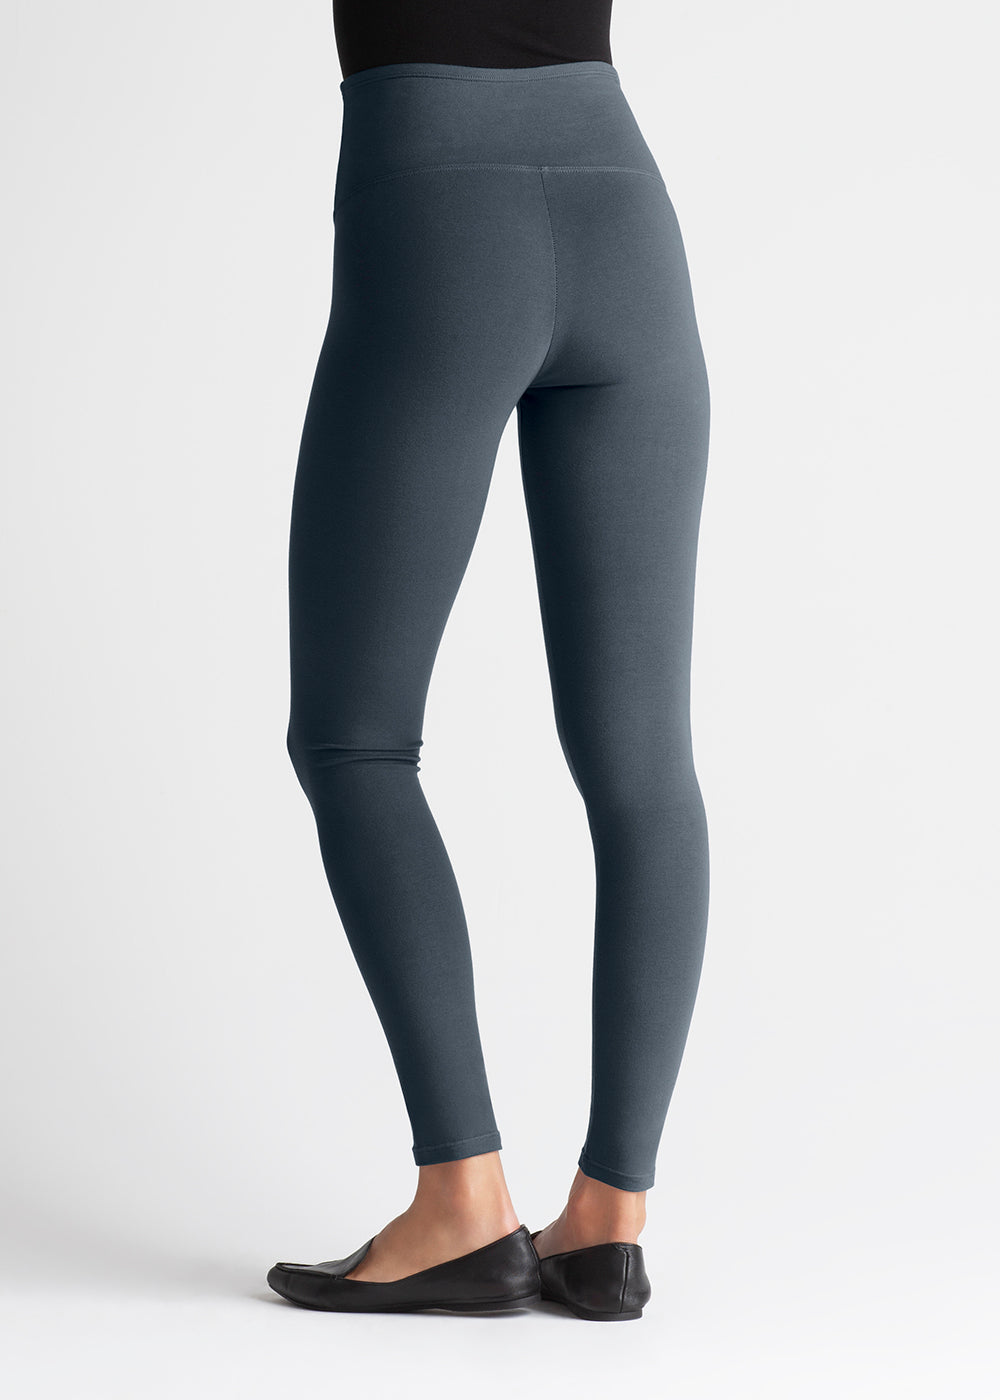 Lou Grey Pants, Legging: stretchy, comfy and endlessly versatile.